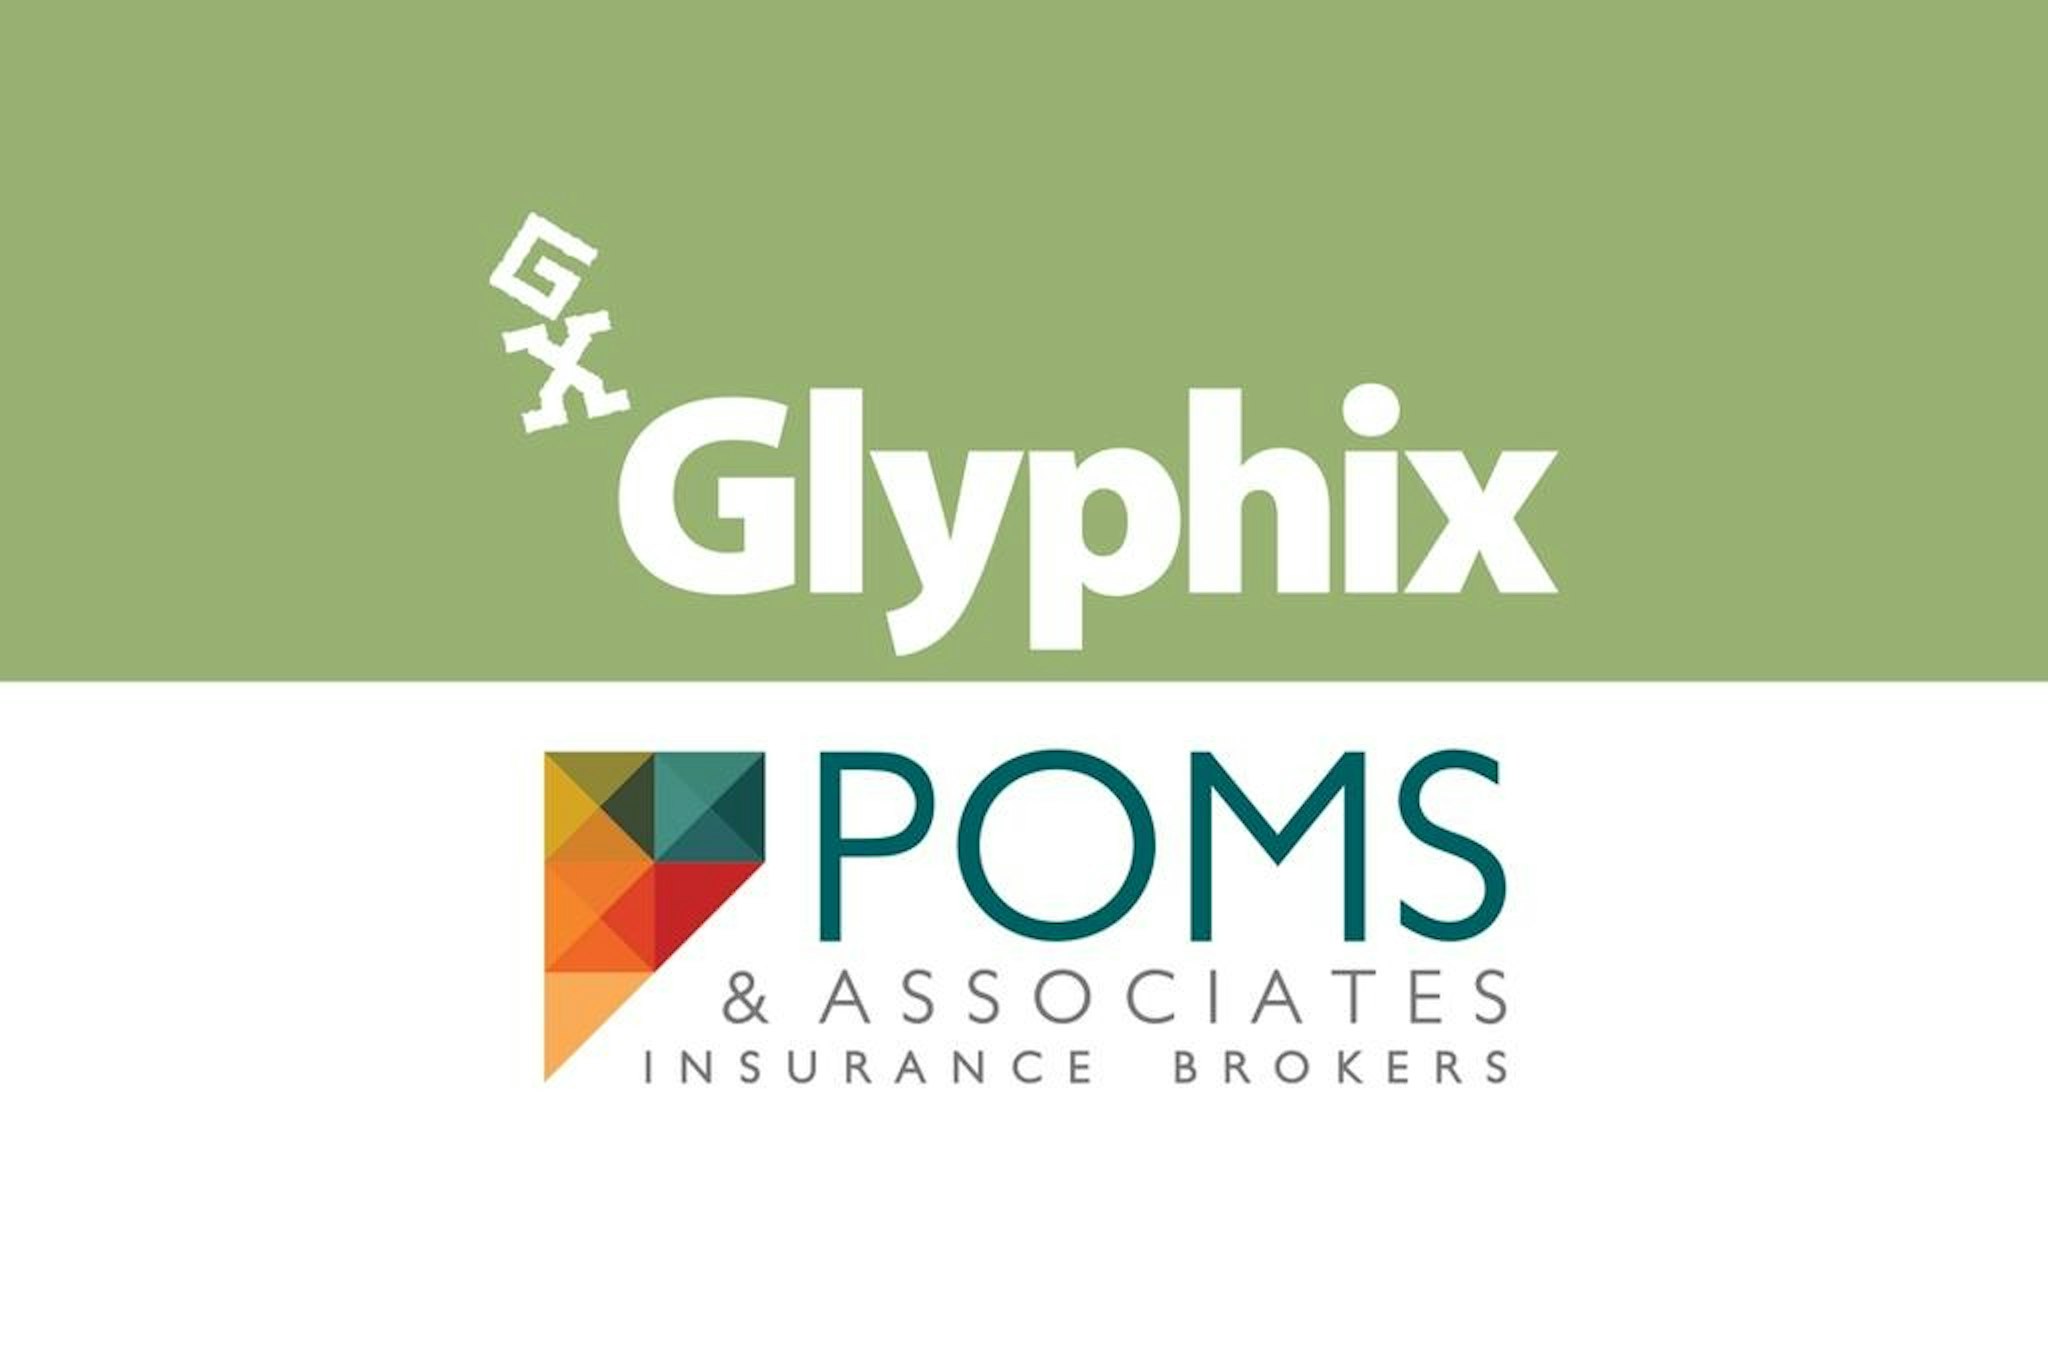 Glyphix welcomes new client Poms & Associates